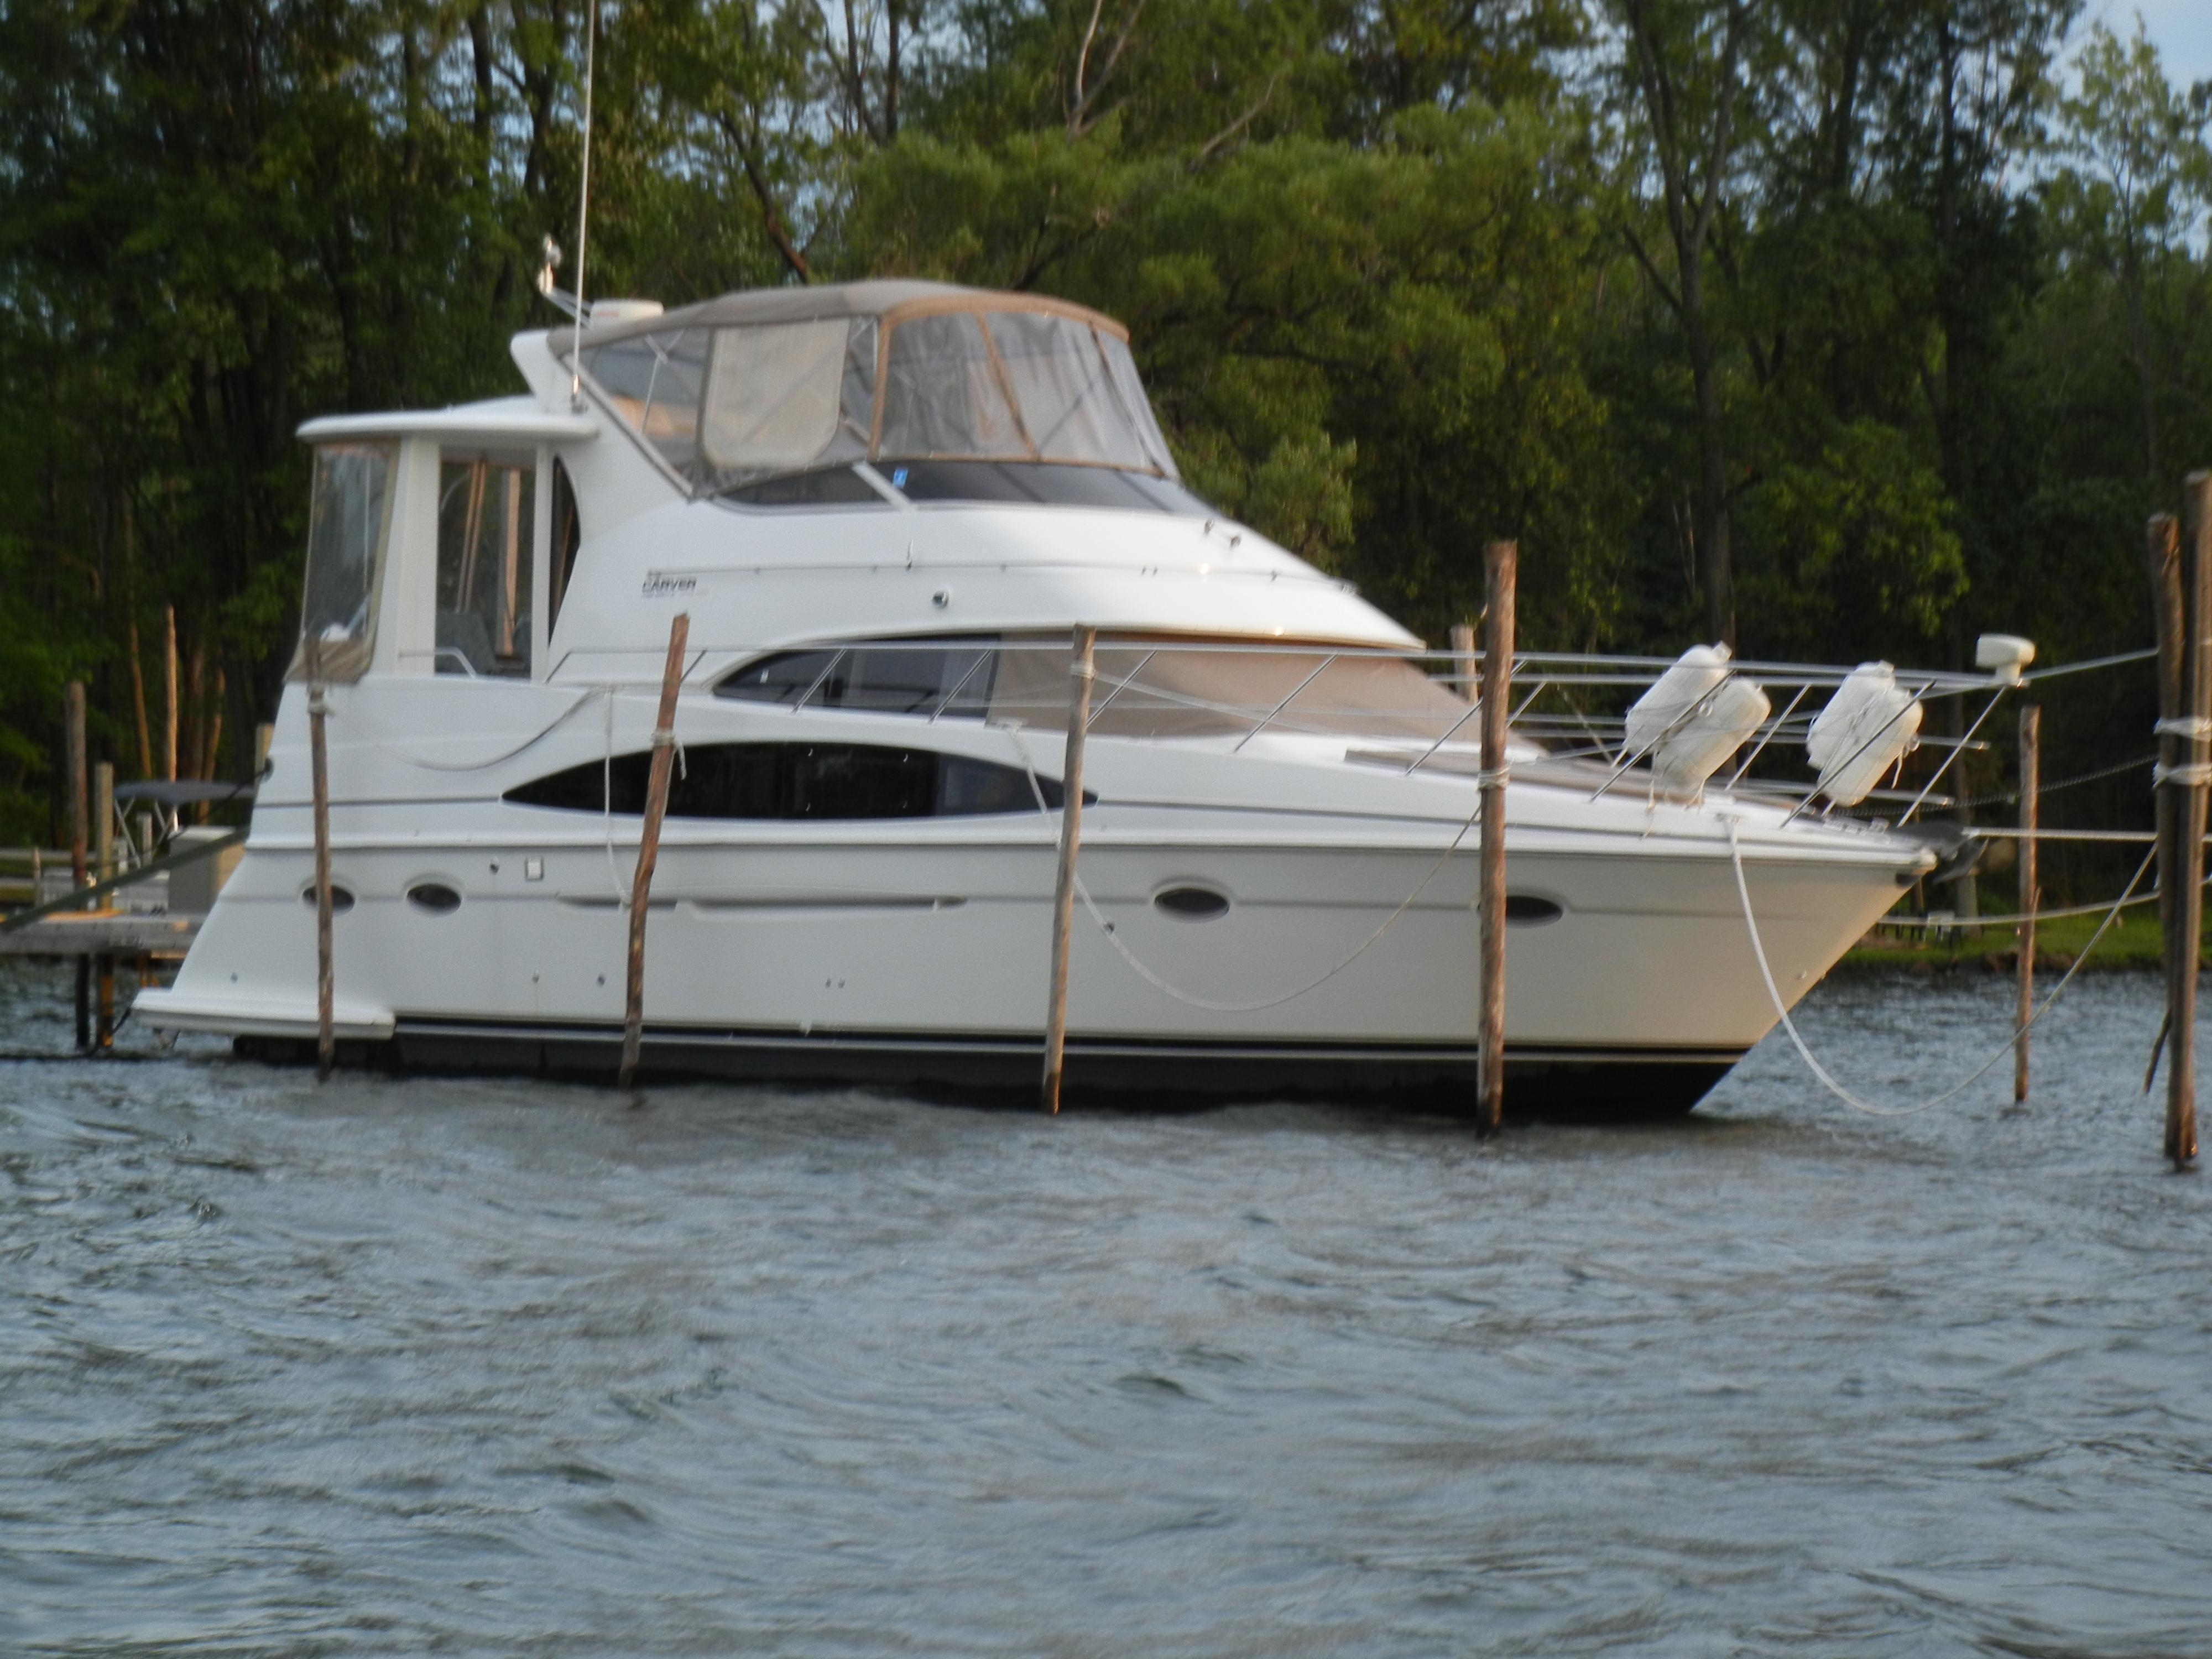 Carver 396 Motor Yacht, Chautauqua Lake-Celoron